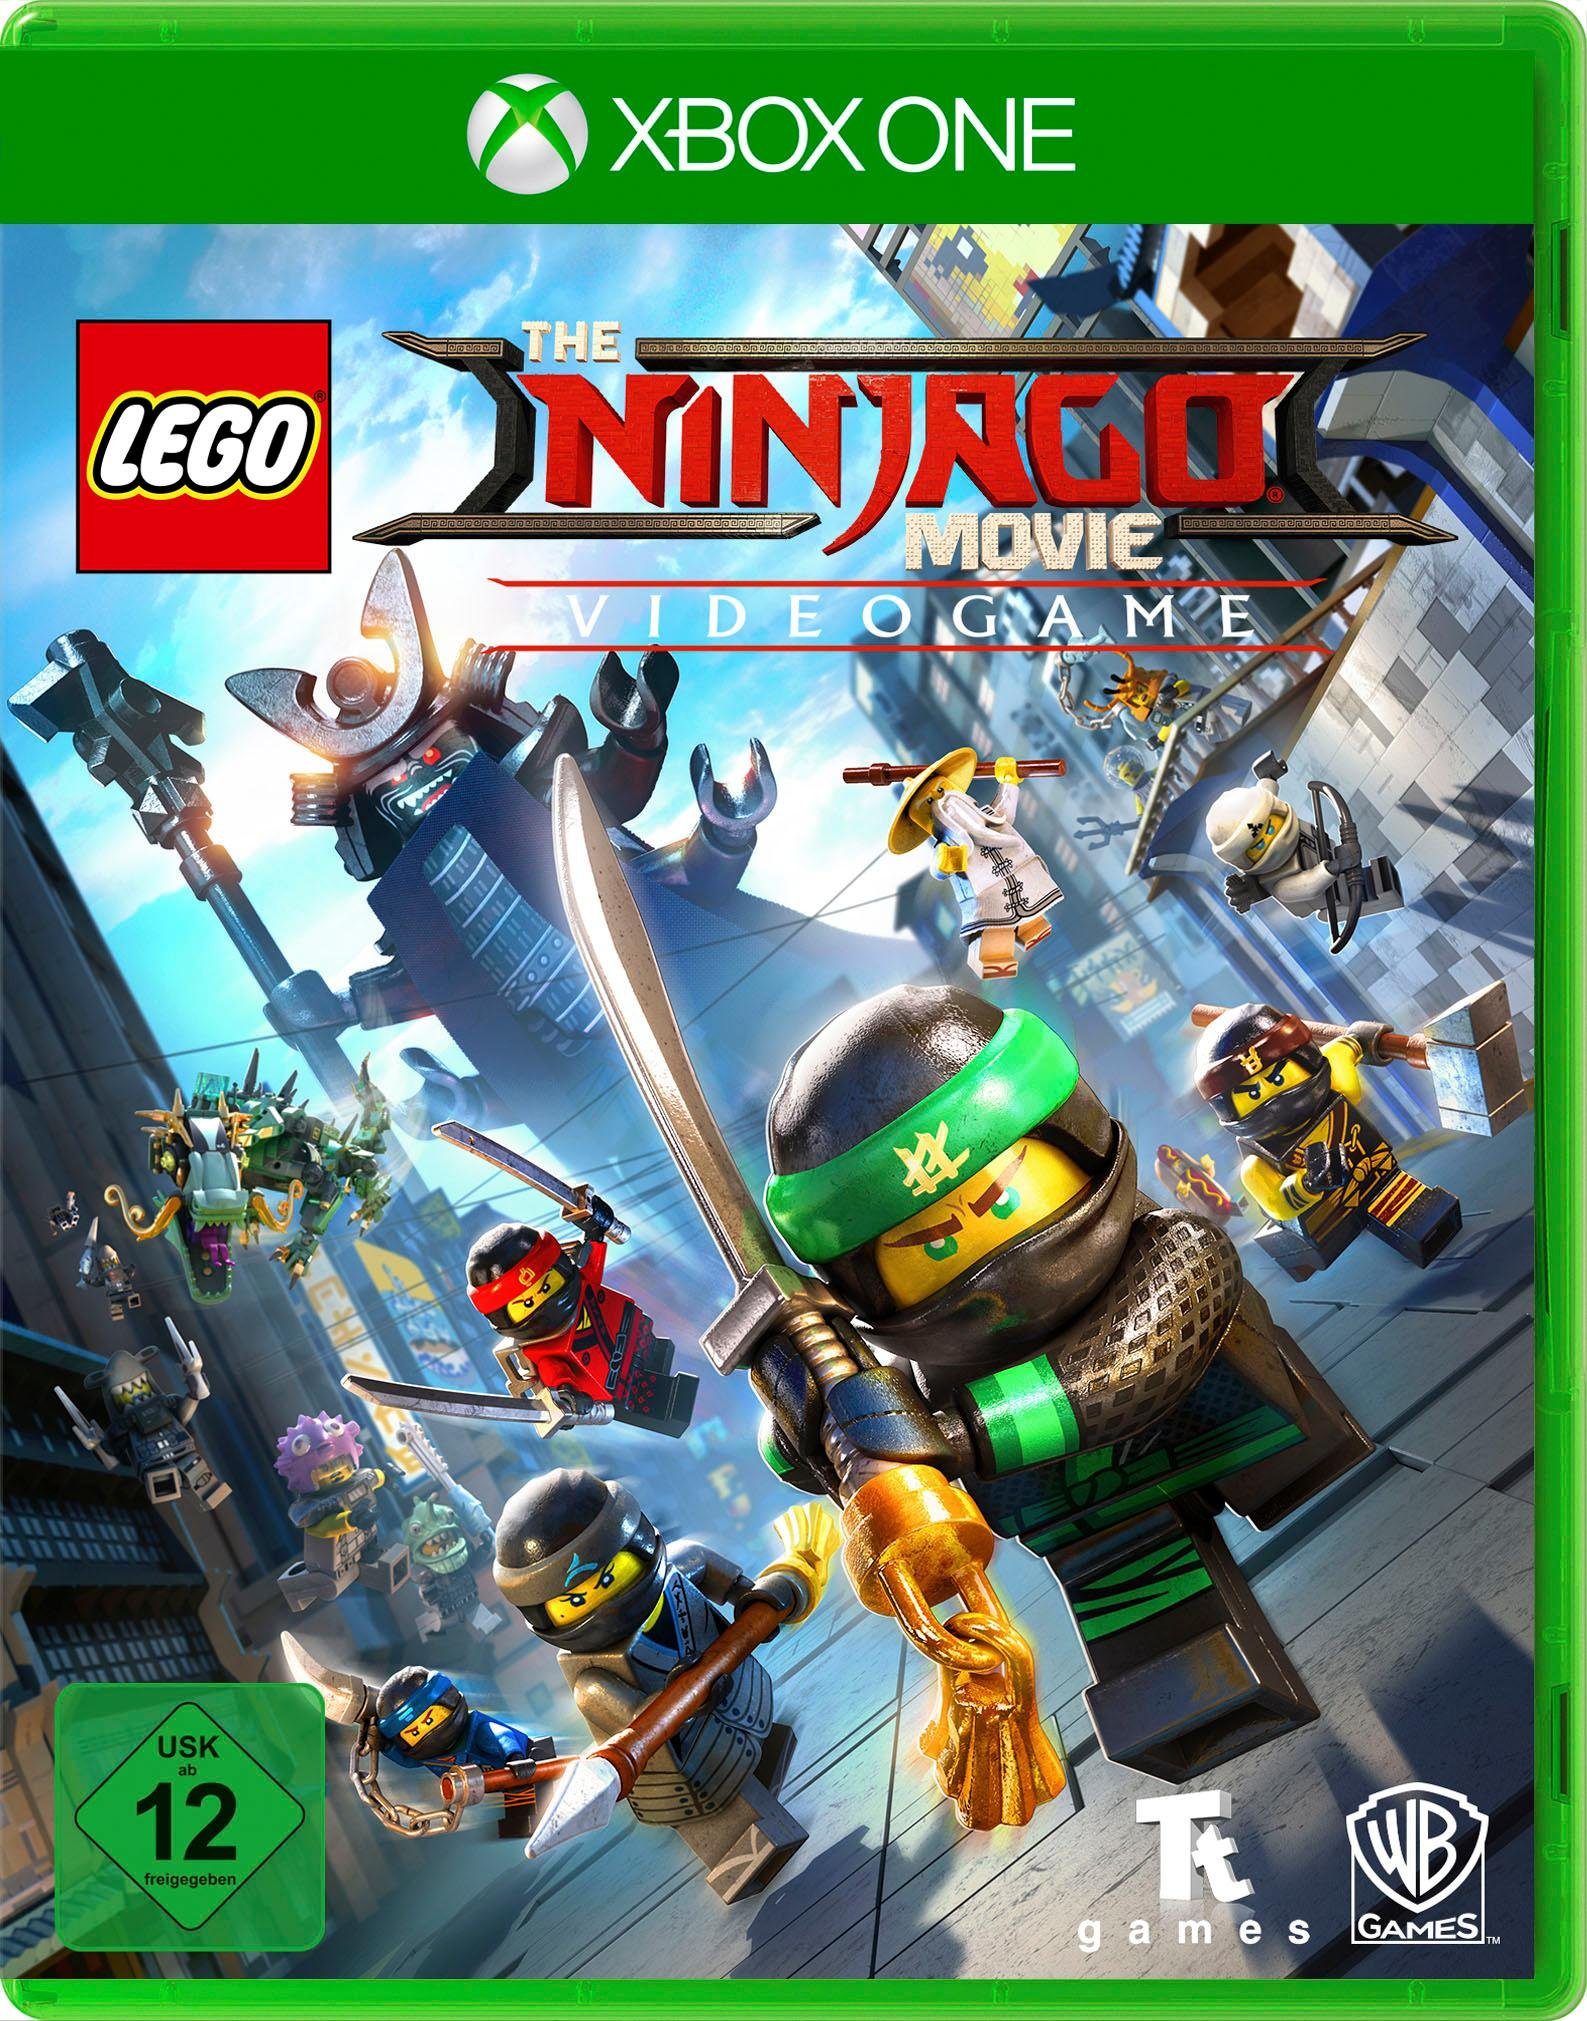 The Lego Ninjago Videogame Xbox One, Movie Pyramide Software